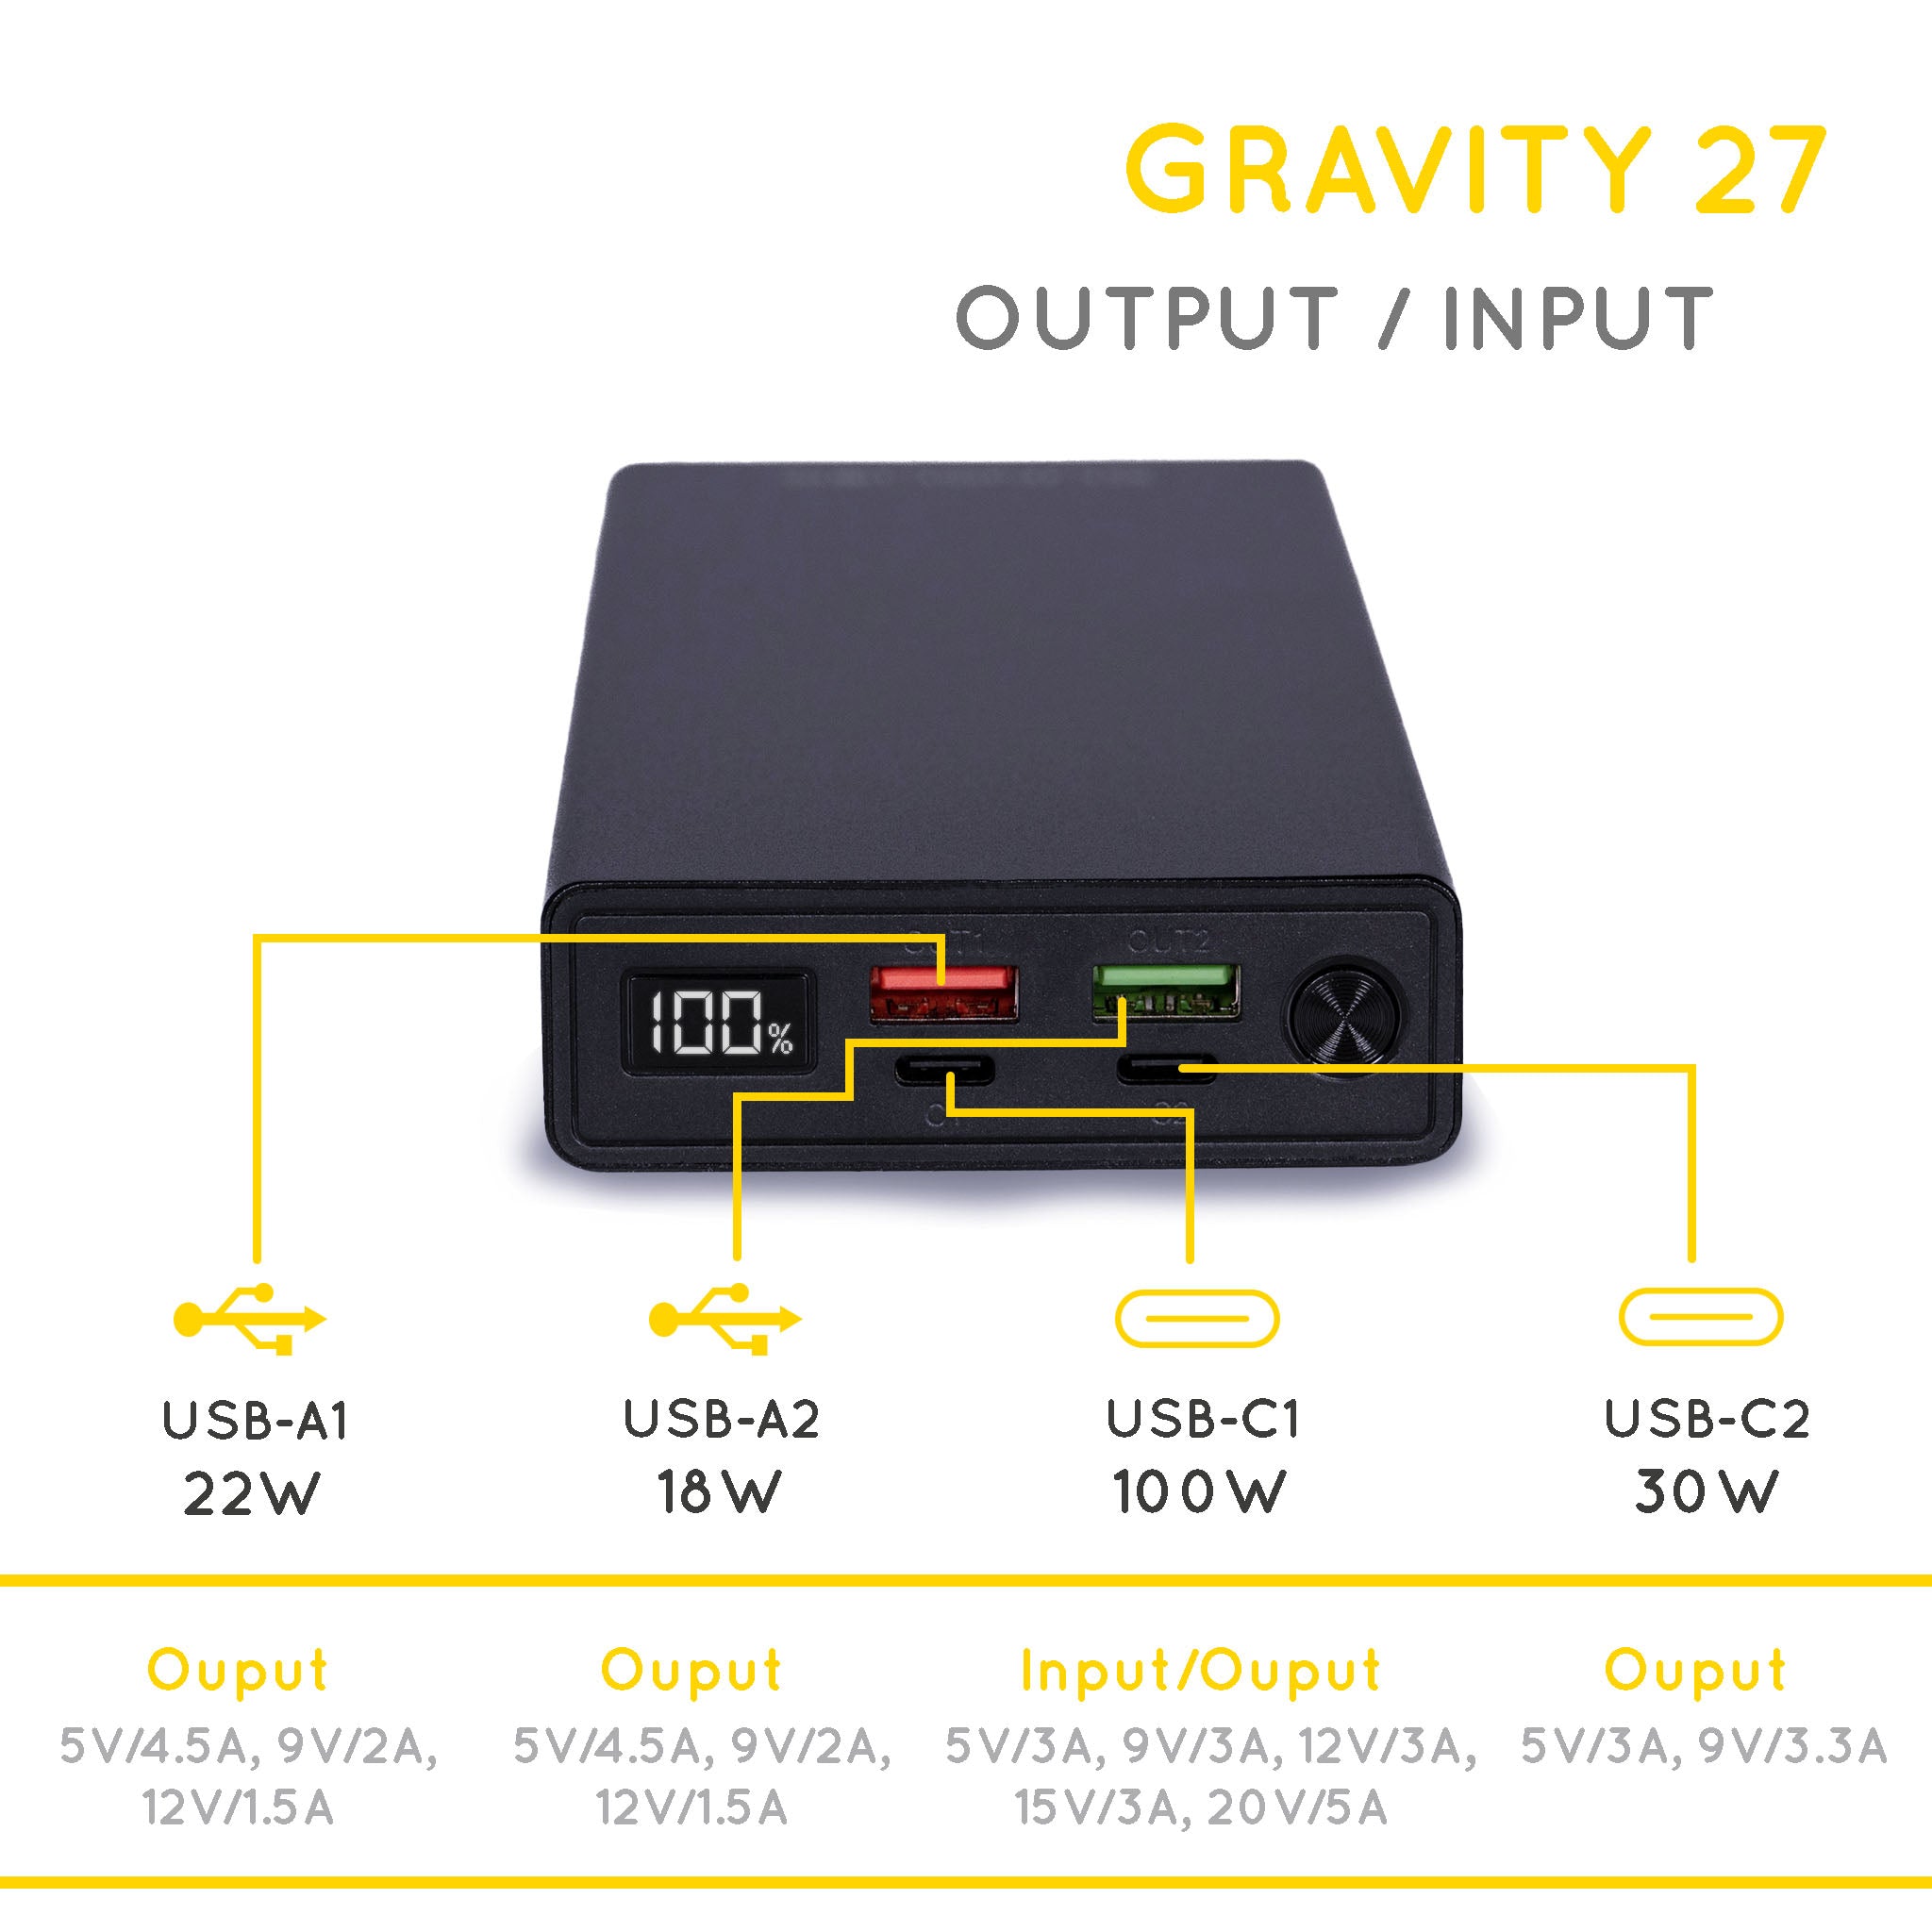 Power bank Gravity 27 output en input informatie: 2 x USB-A (output), 2 x USB-C (eerste is output / input de andere gewoon een output